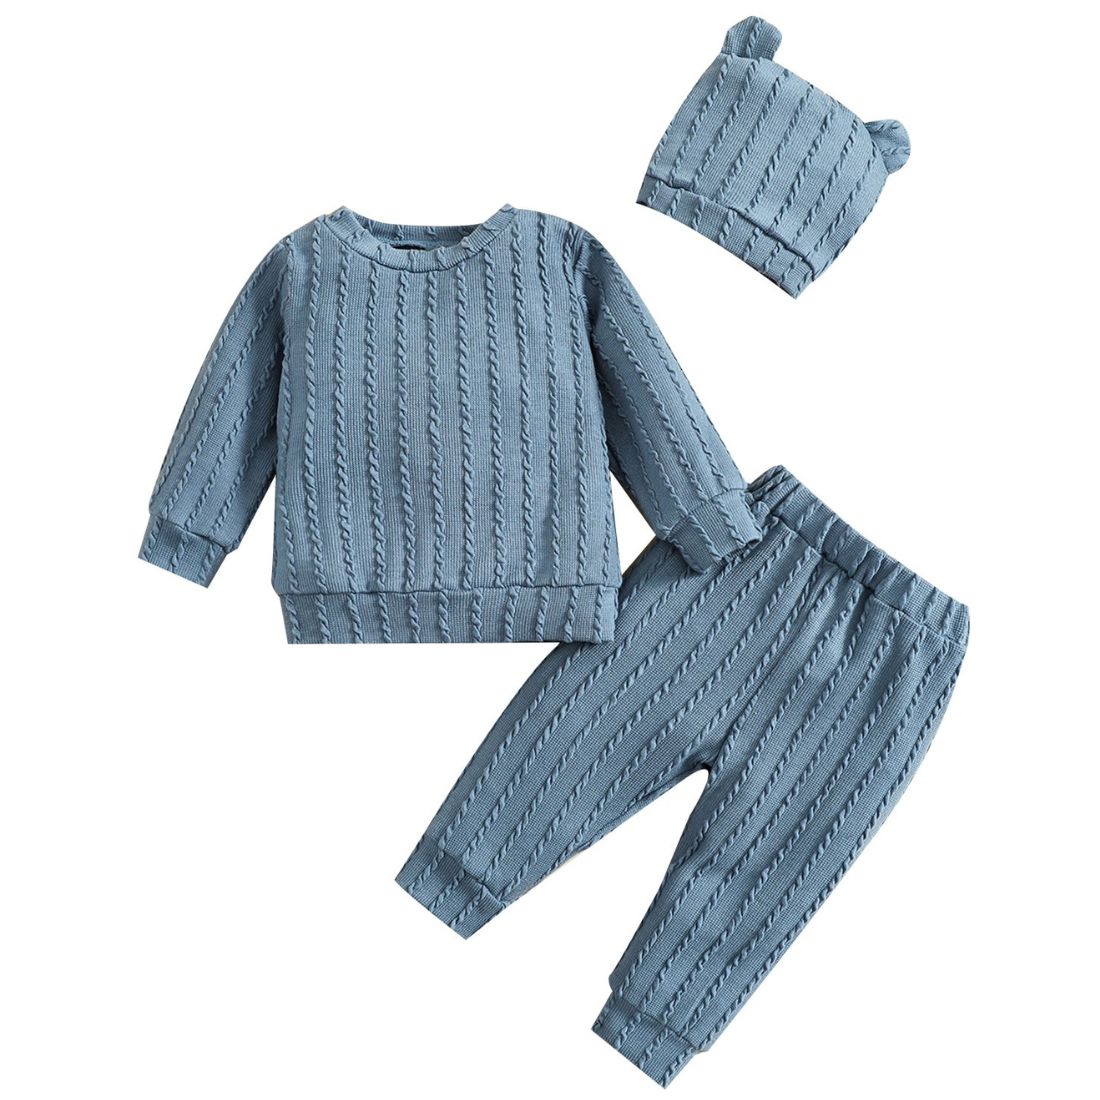 Blue Textured Braid Baby Clothing Set